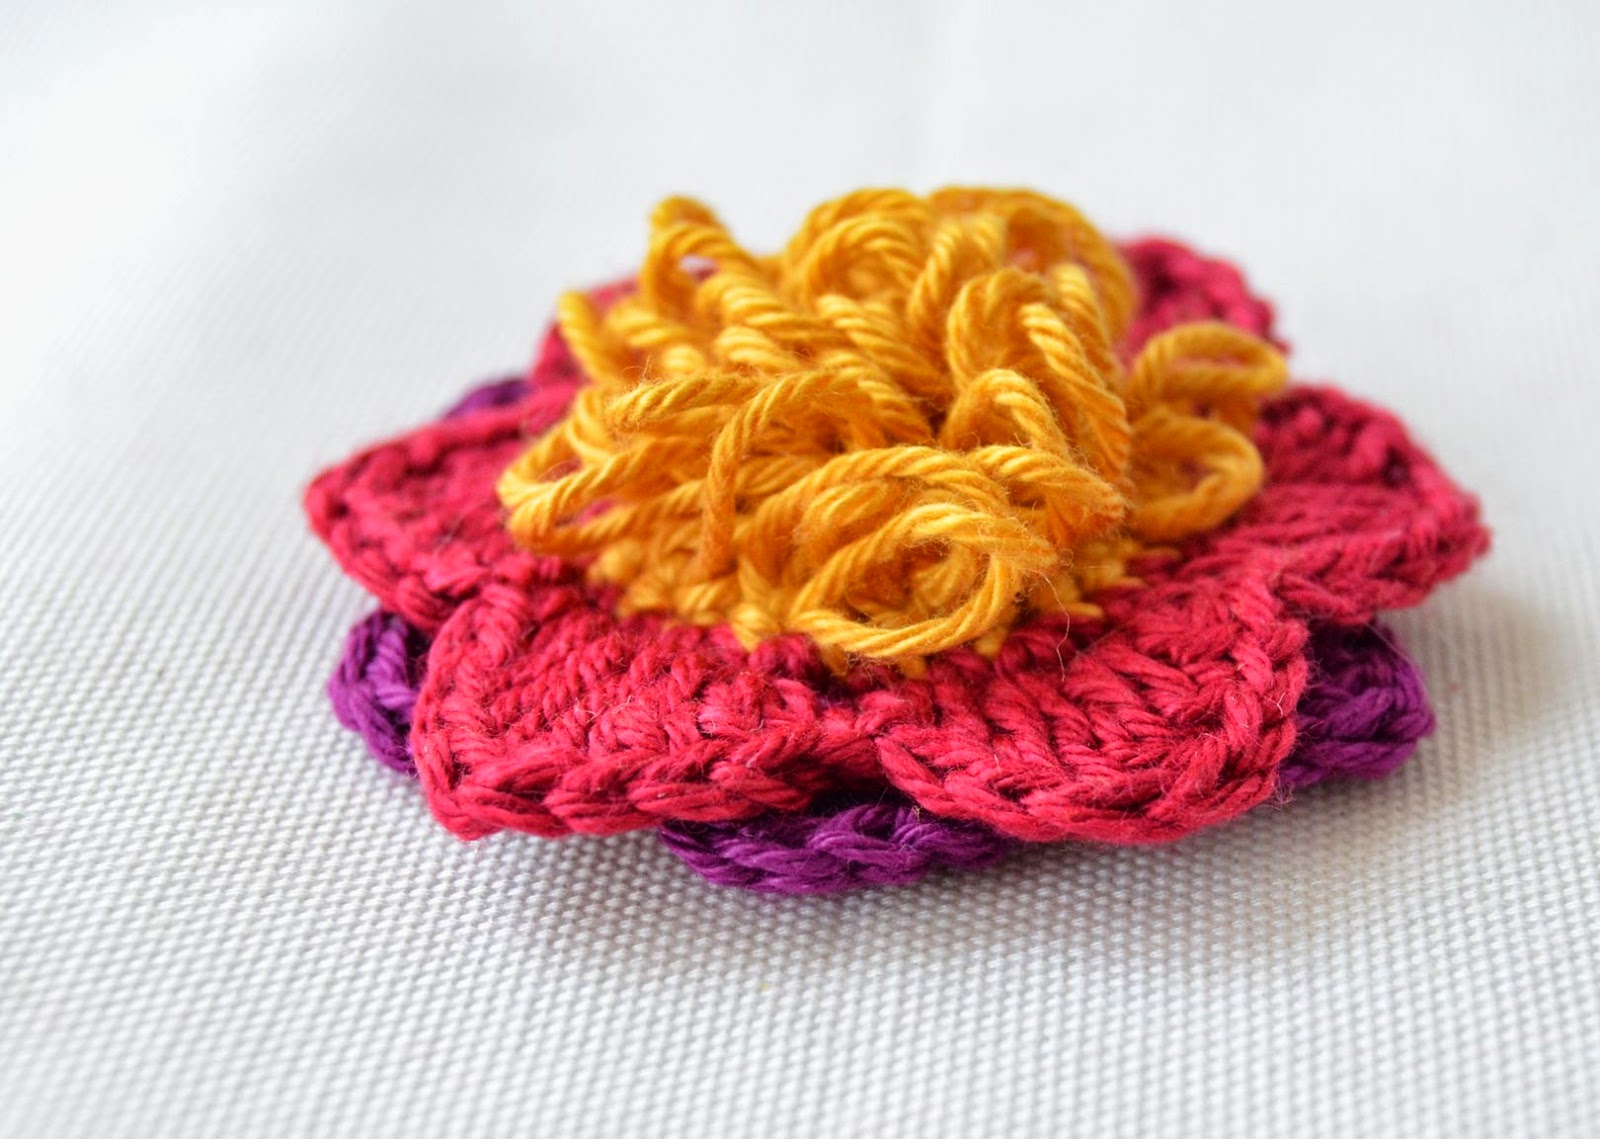 Ravelry: Small Flower Applique pattern by Crochet 'n' Create